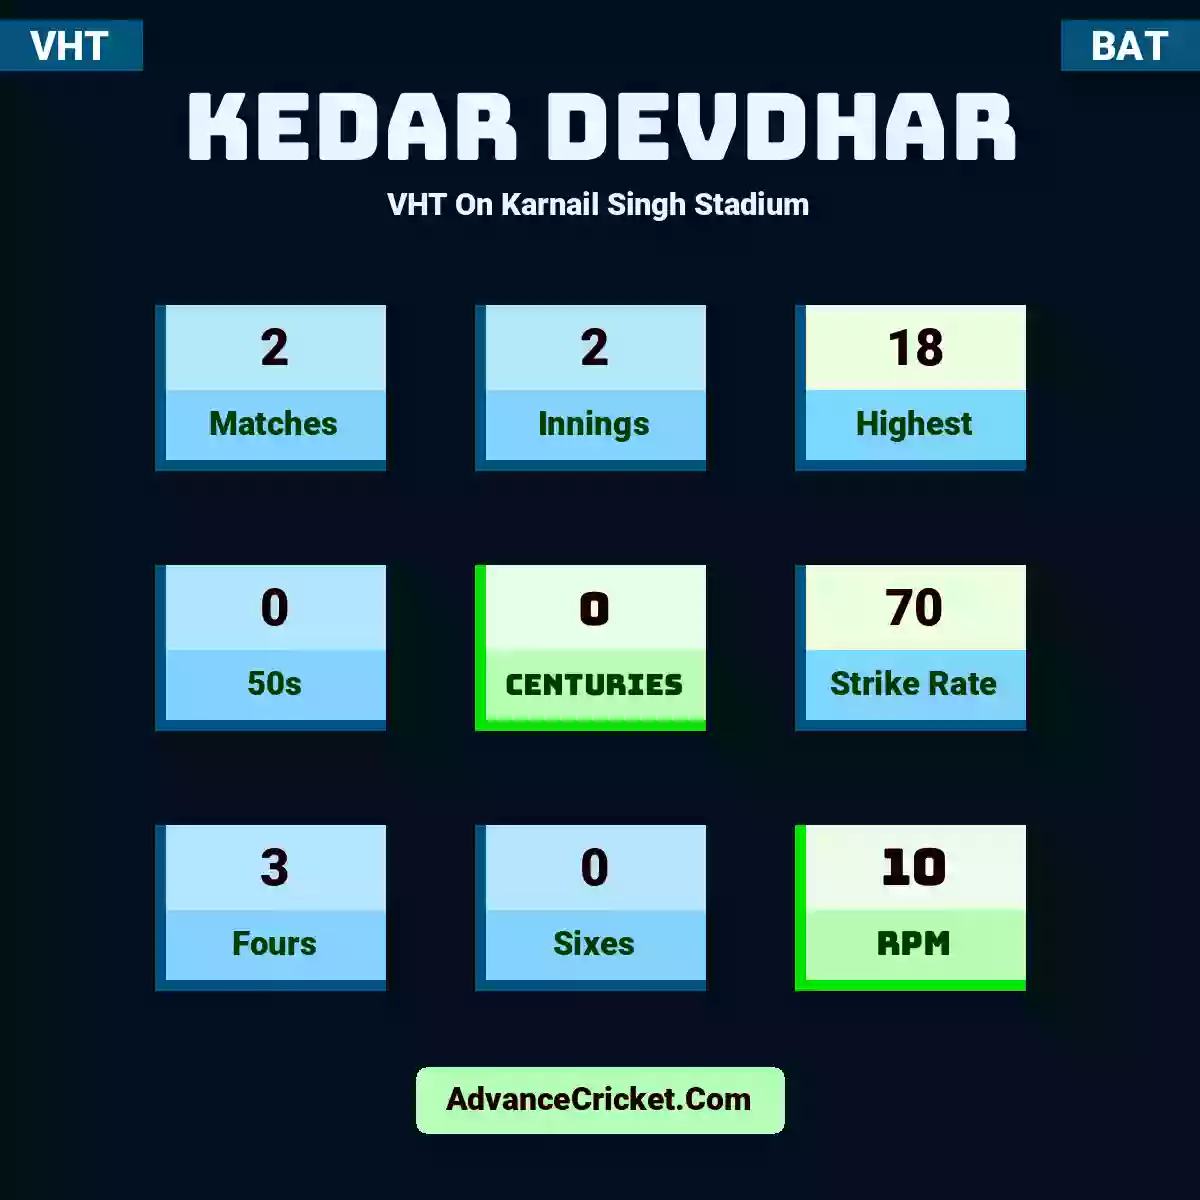 Kedar Devdhar VHT  On Karnail Singh Stadium, Kedar Devdhar played 2 matches, scored 18 runs as highest, 0 half-centuries, and 0 centuries, with a strike rate of 70. K.Devdhar hit 3 fours and 0 sixes, with an RPM of 10.